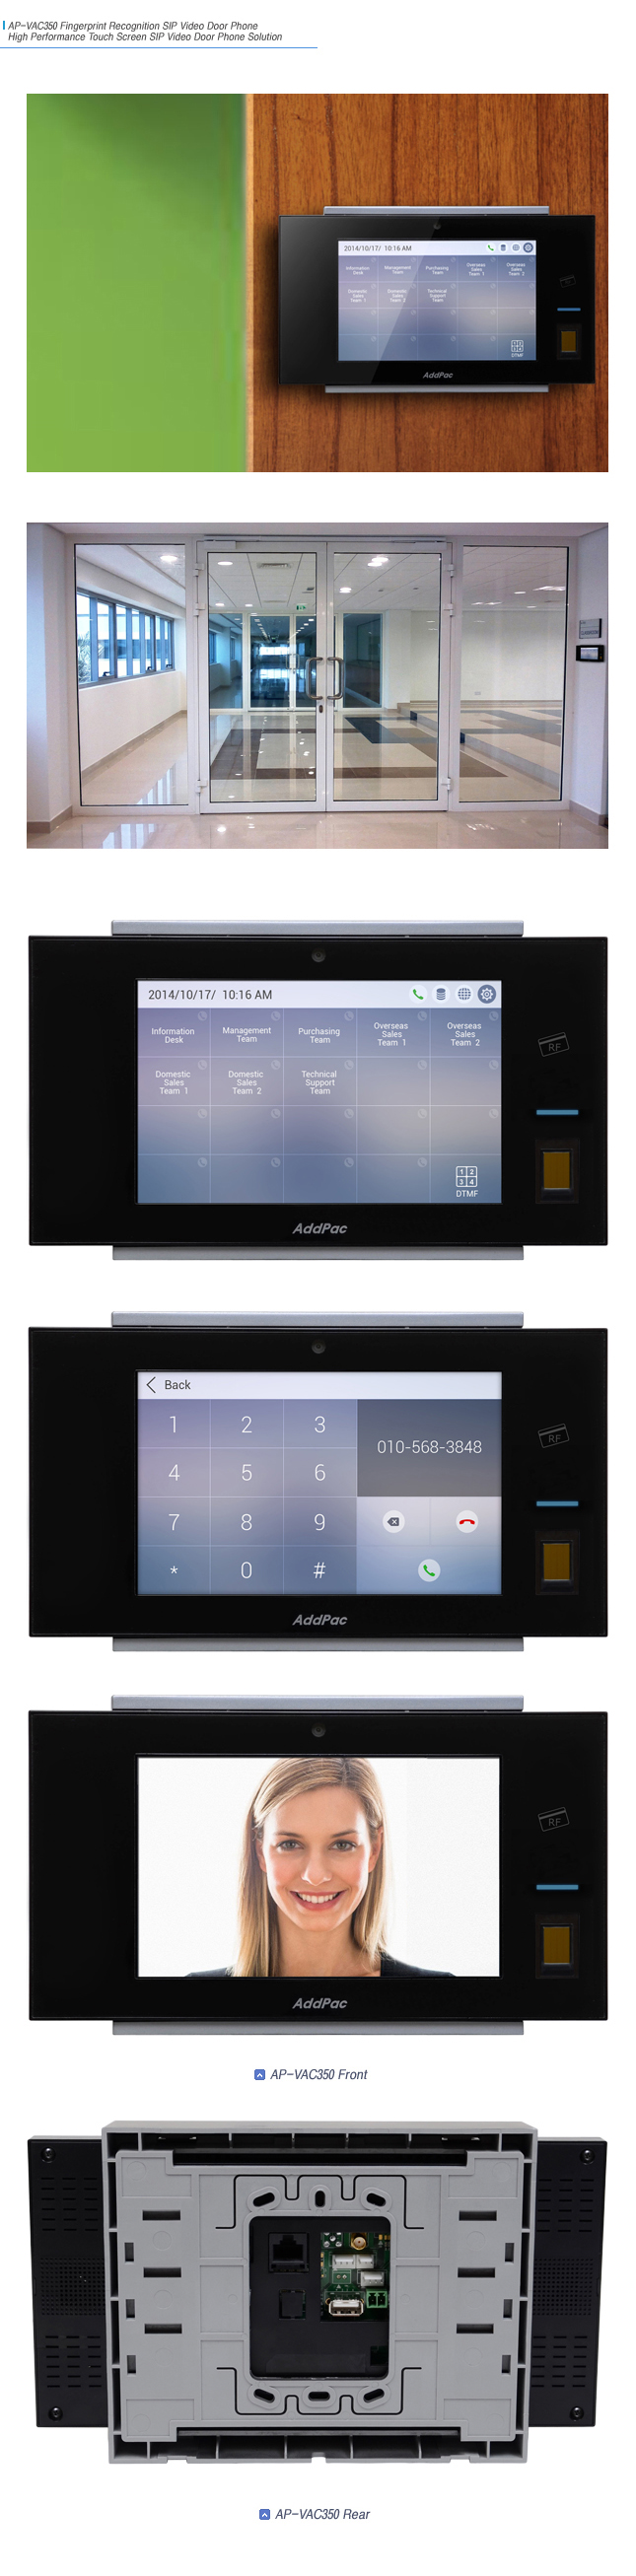 AP-VAC350 IP Video Door Phone (touch screen) | AddPac